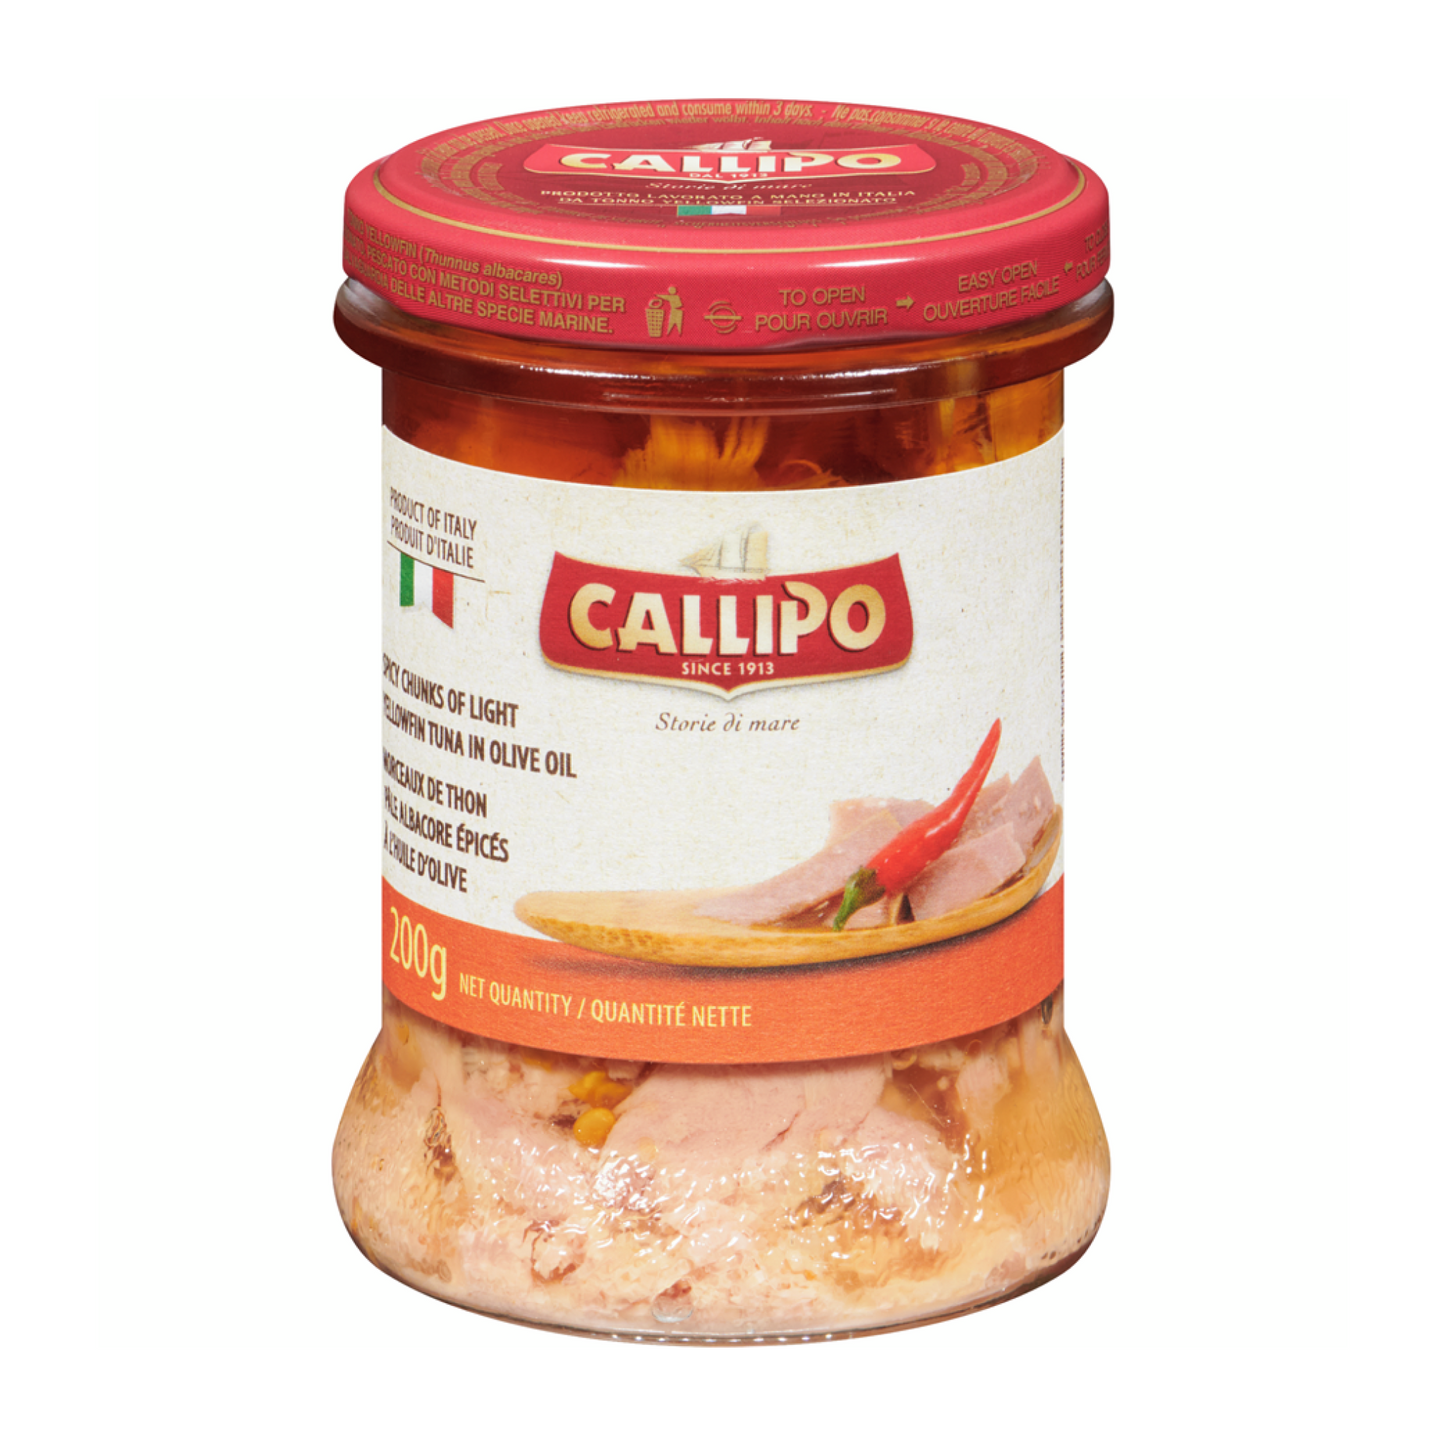 Callipo Spicy Chunks of Light Yellowfin Tuna in Olive Oil 200g